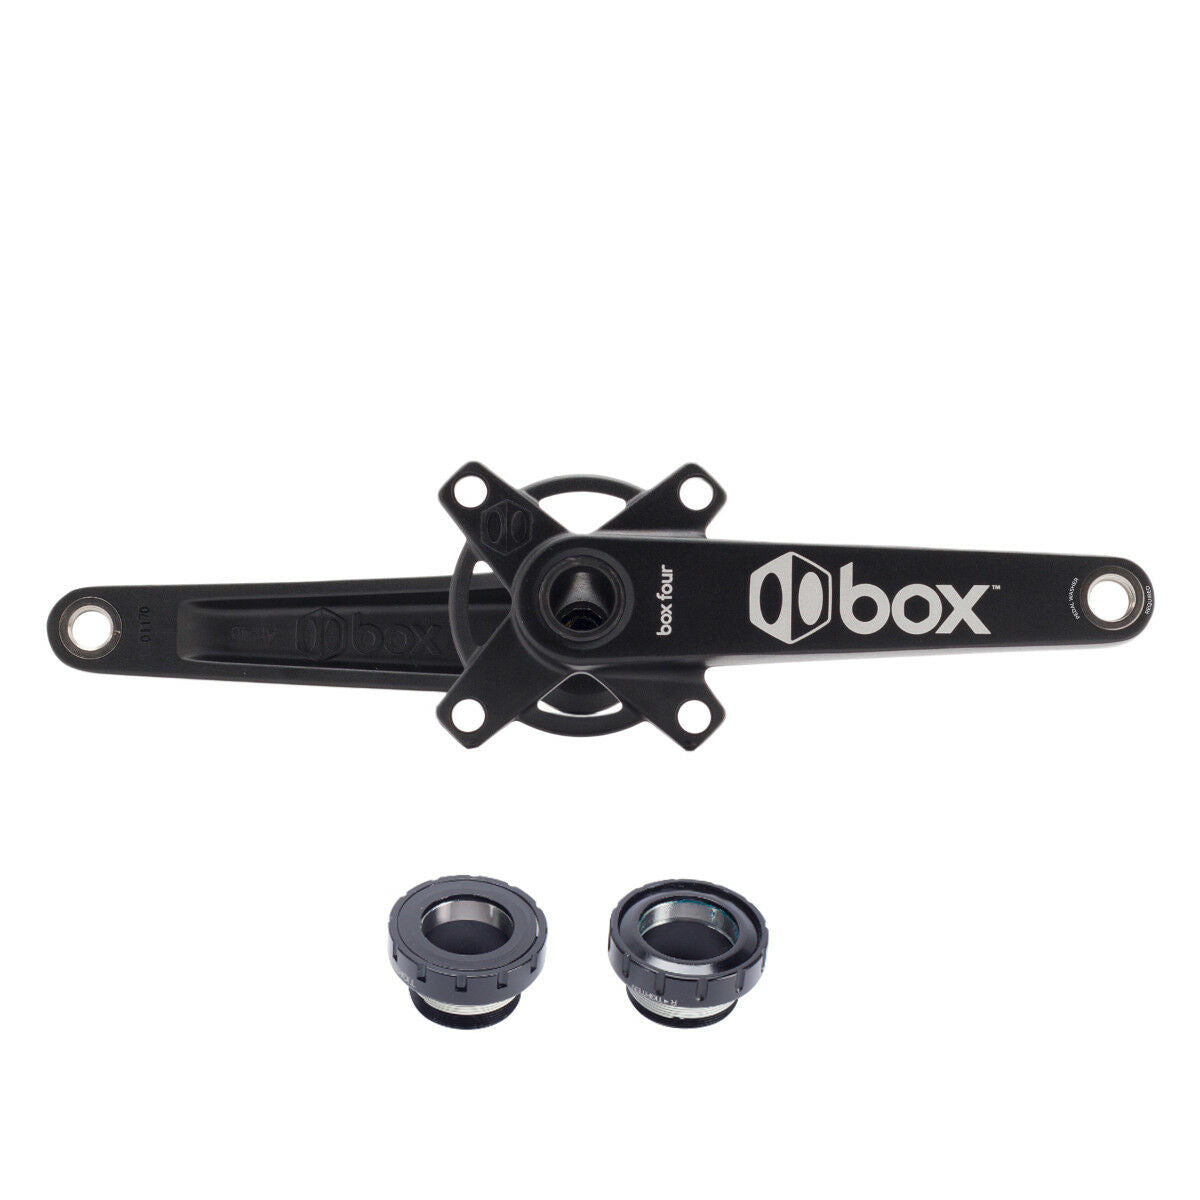 Box Four 2-Piece BMX Crank Set - 170mm - Black - w/ Euro BB